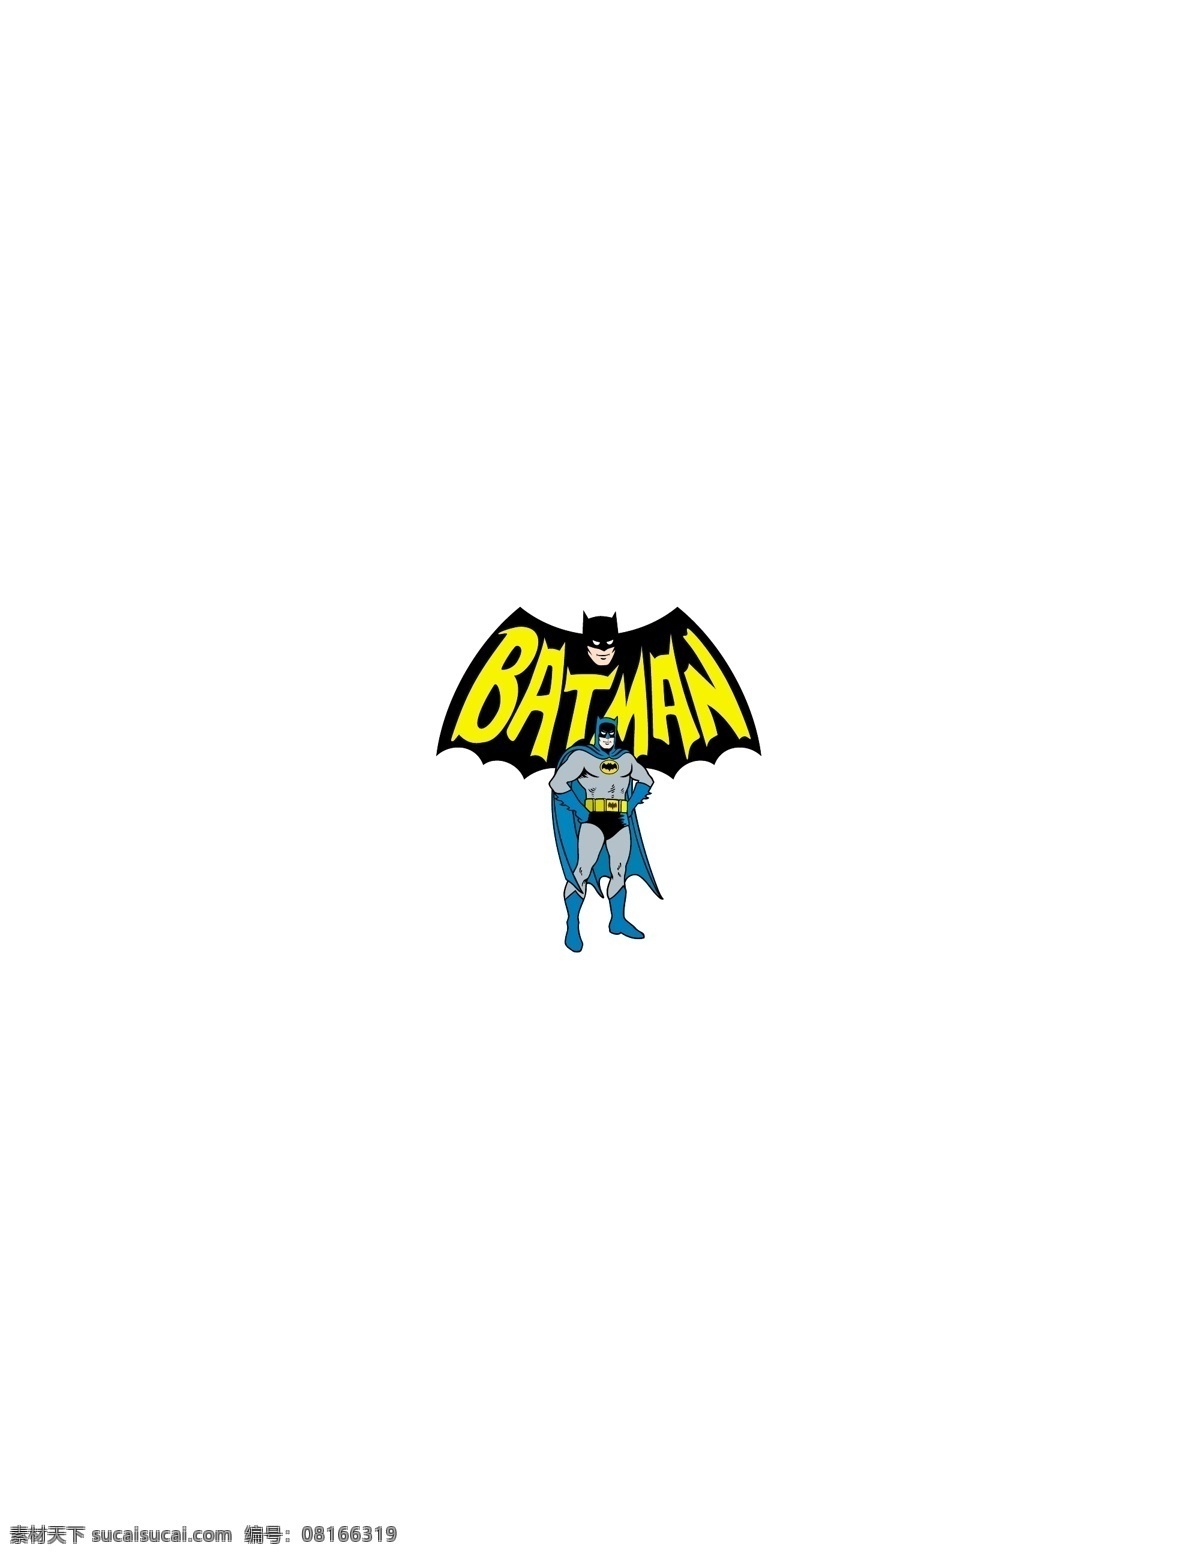 batman logo大全 logo 设计欣赏 商业矢量 矢量下载 卡通 形象 标志设计 欣赏 网页矢量 矢量图 其他矢量图